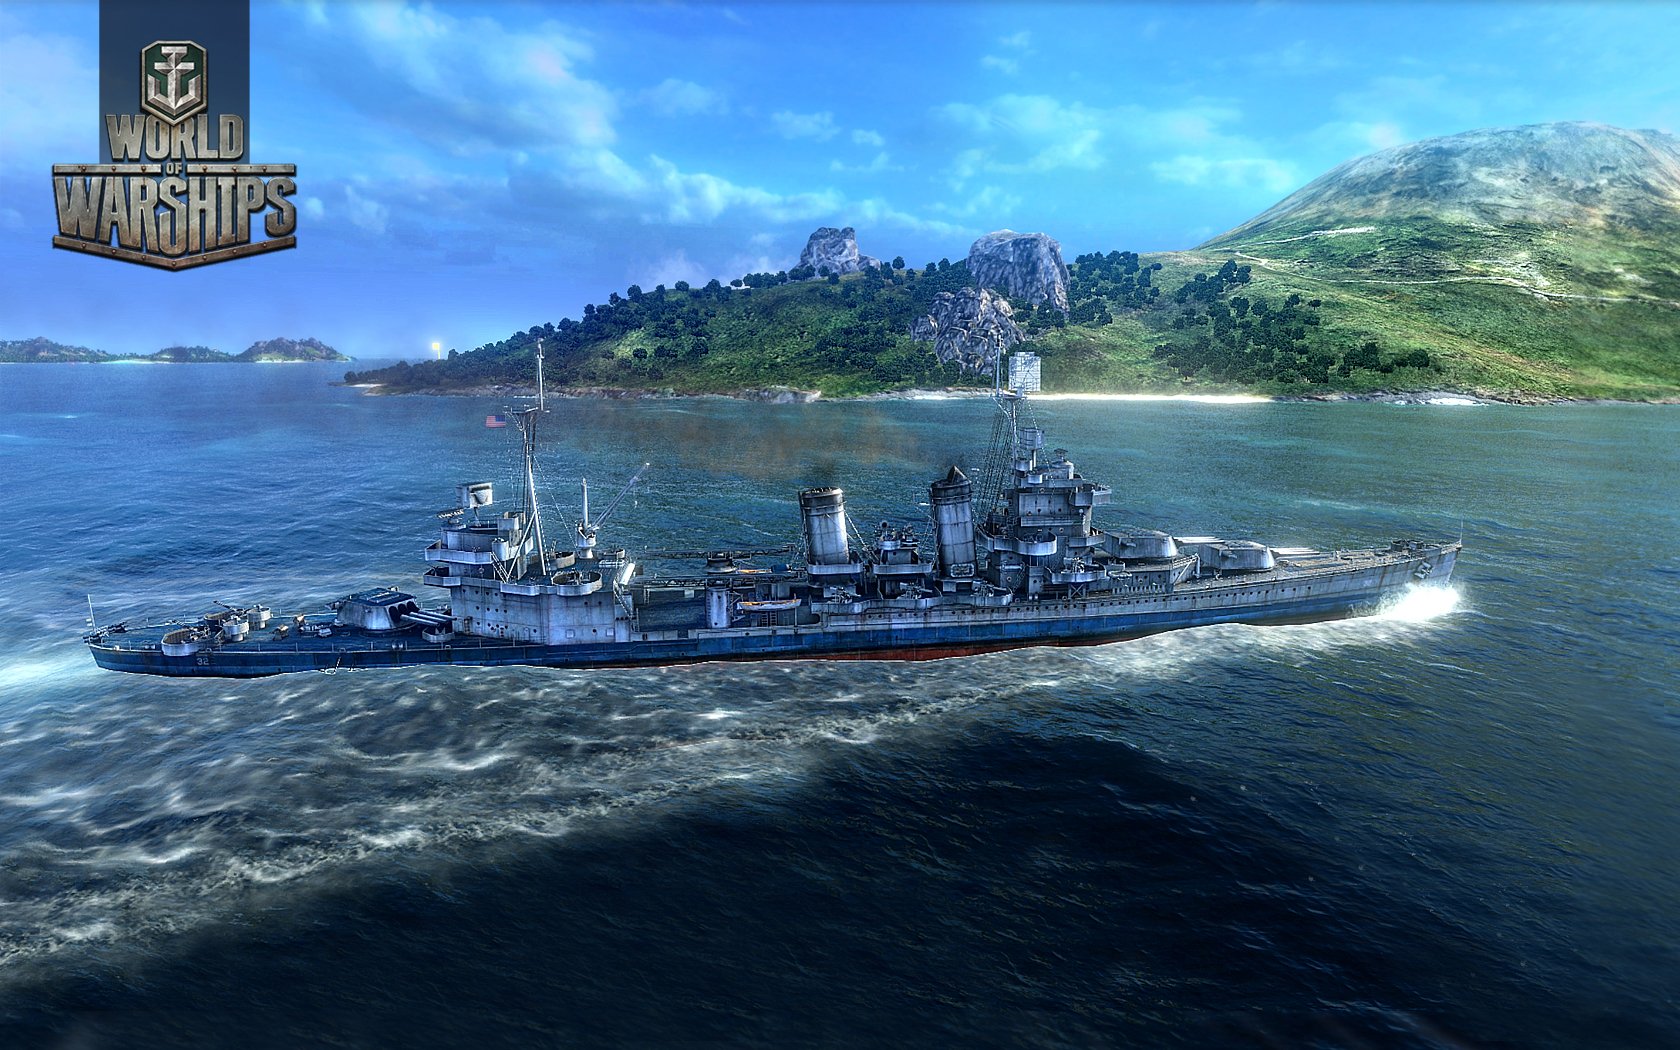 battleship online games